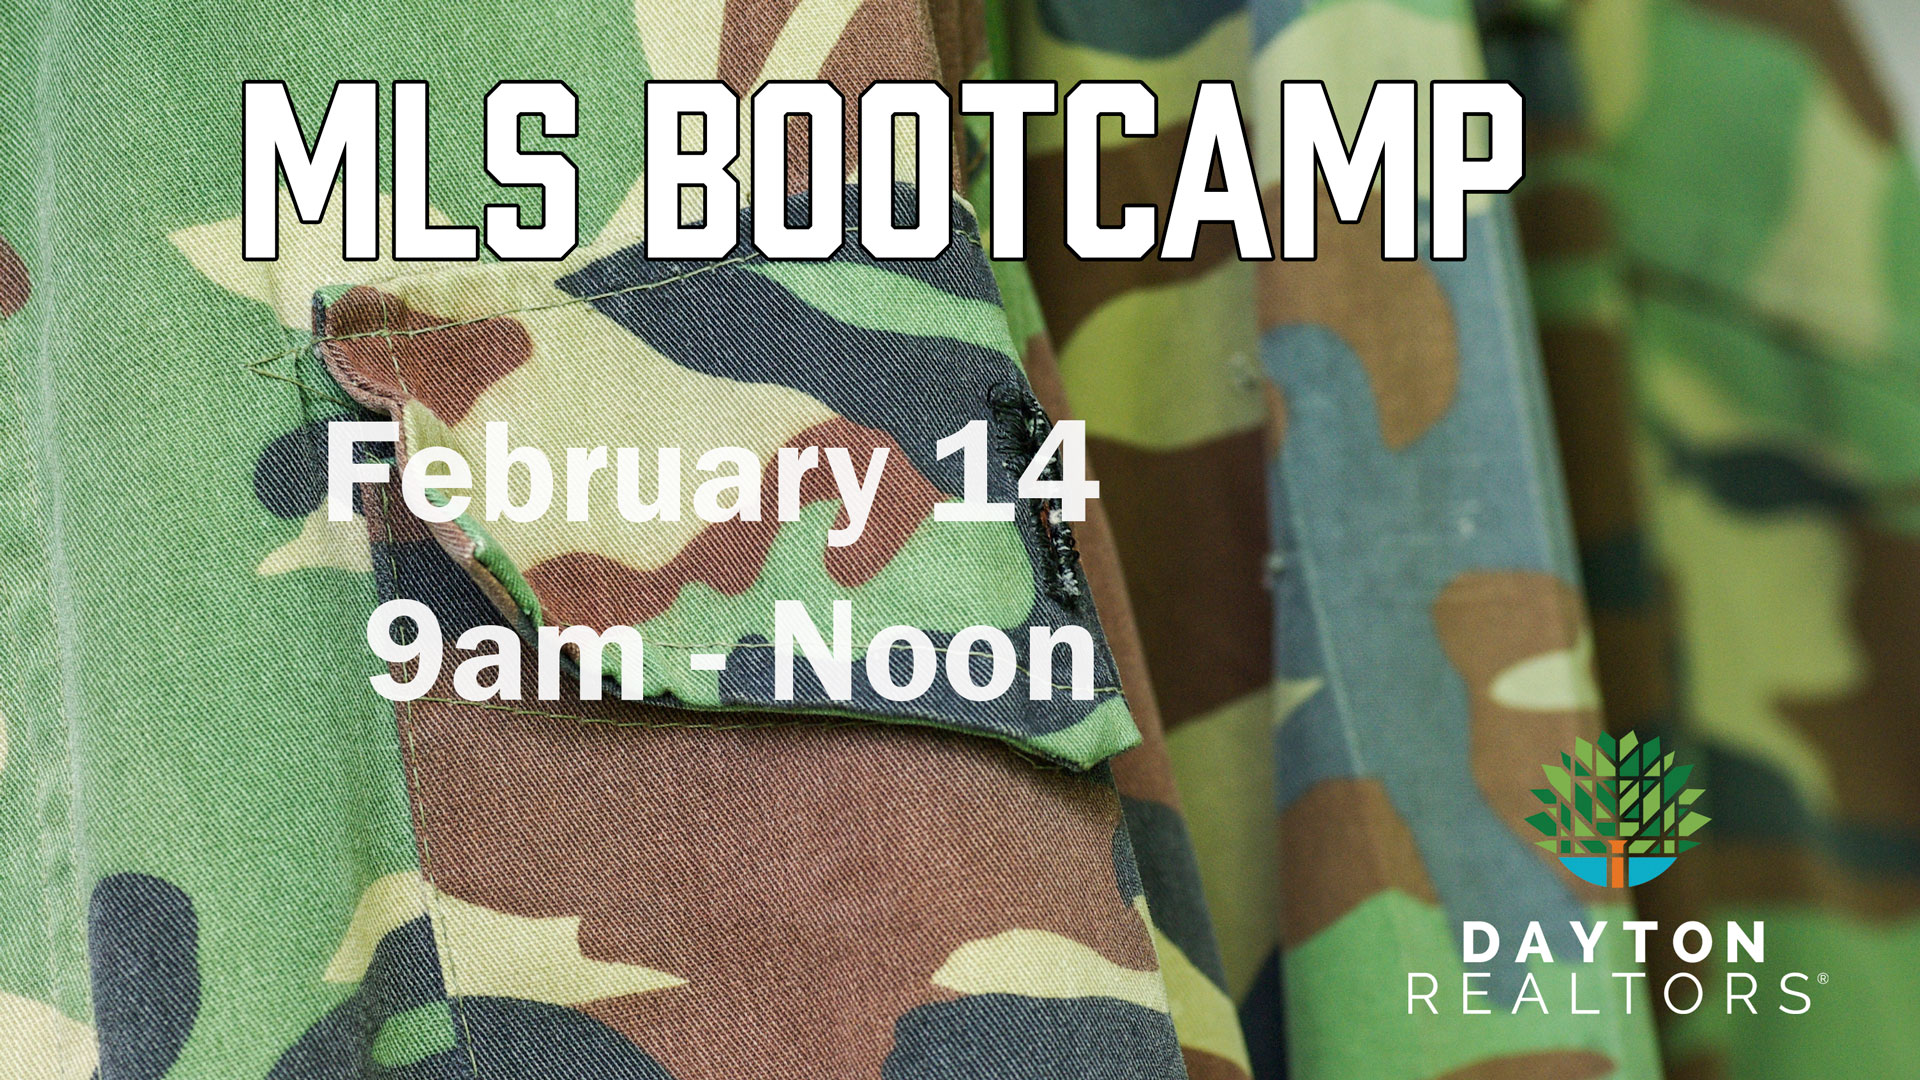 MLS Bootcamp, February 14